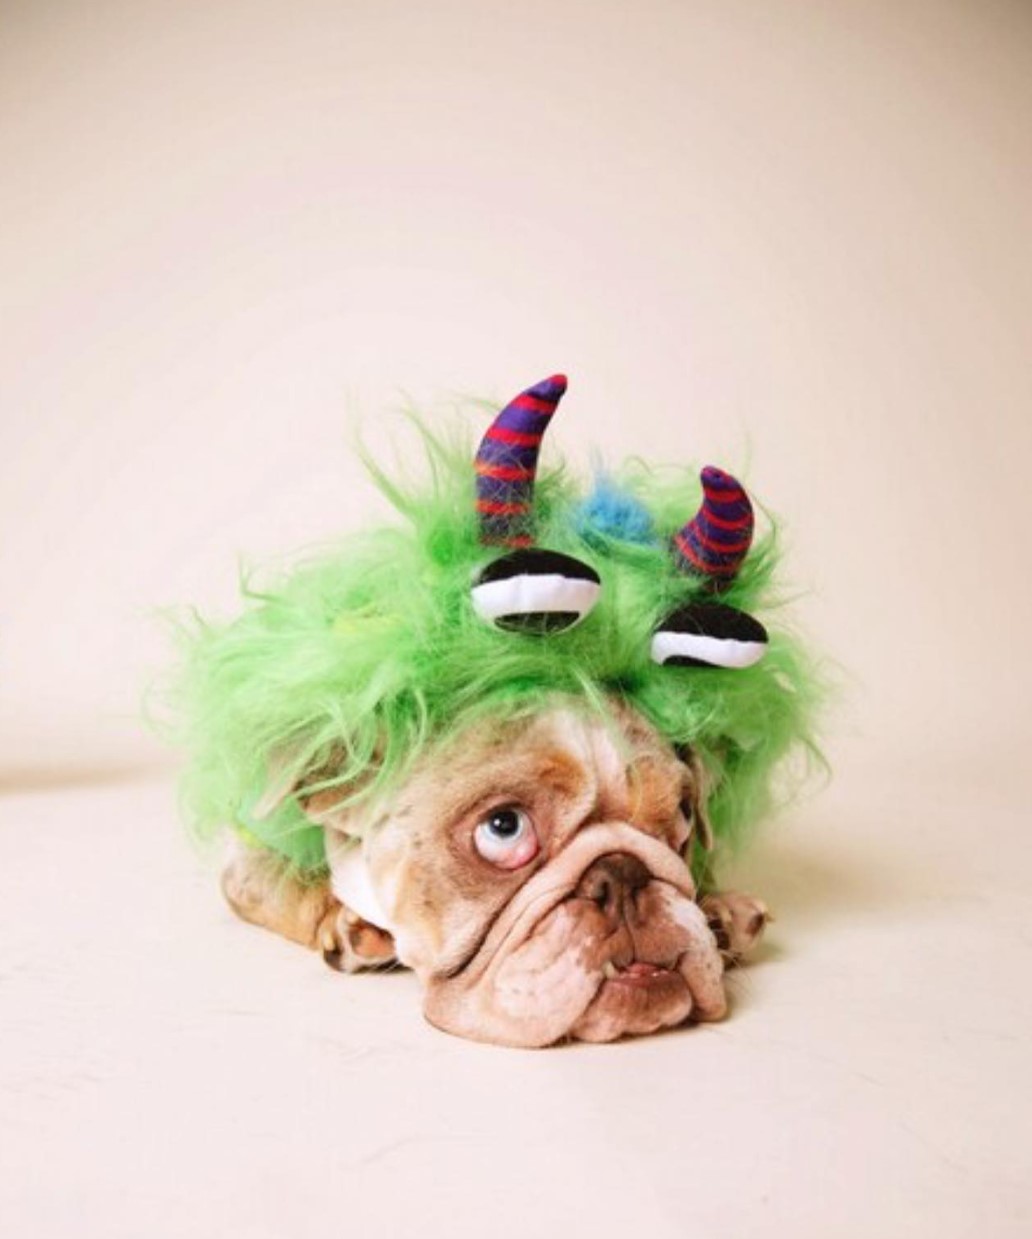 photo of bulldog wearing a costume